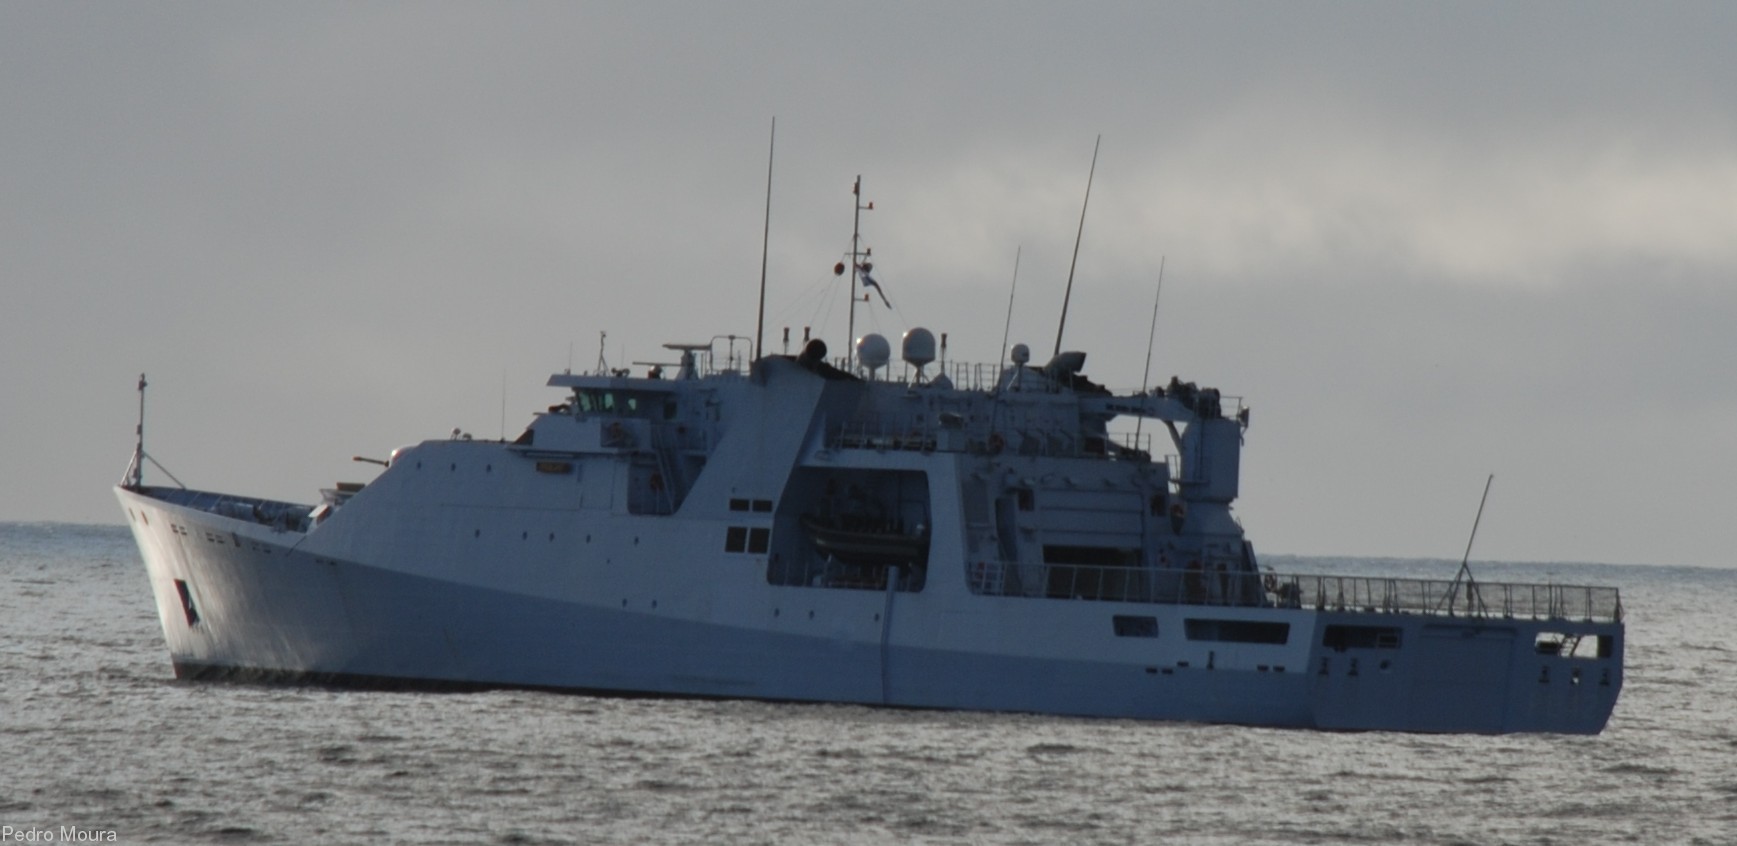 p-842 hnlms friesland holland class offshore patrol vessel opv royal netherlands navy 13